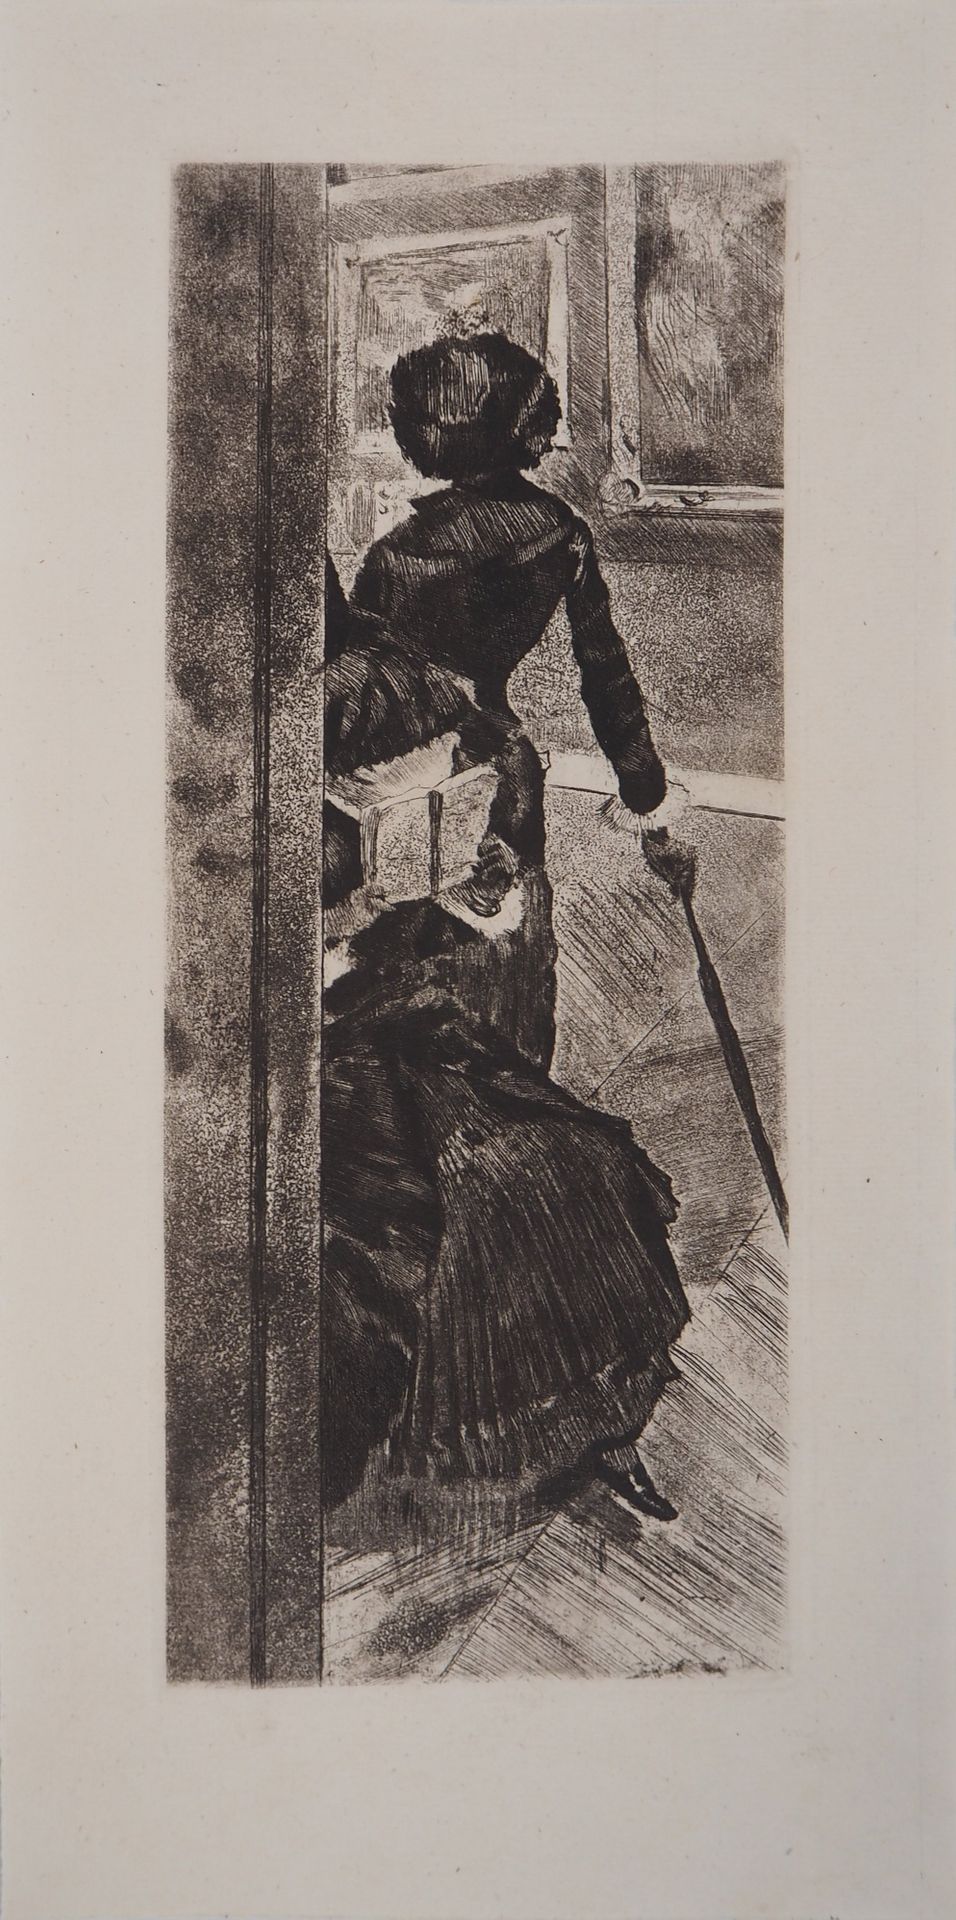 Edgar Degas 埃德加-迪加斯

在卢浮宫，画作《玛丽-卡萨特》。

原始干点蚀刻，软漆和水印

可能是为Ambroise Vollard在1880年左&hellip;